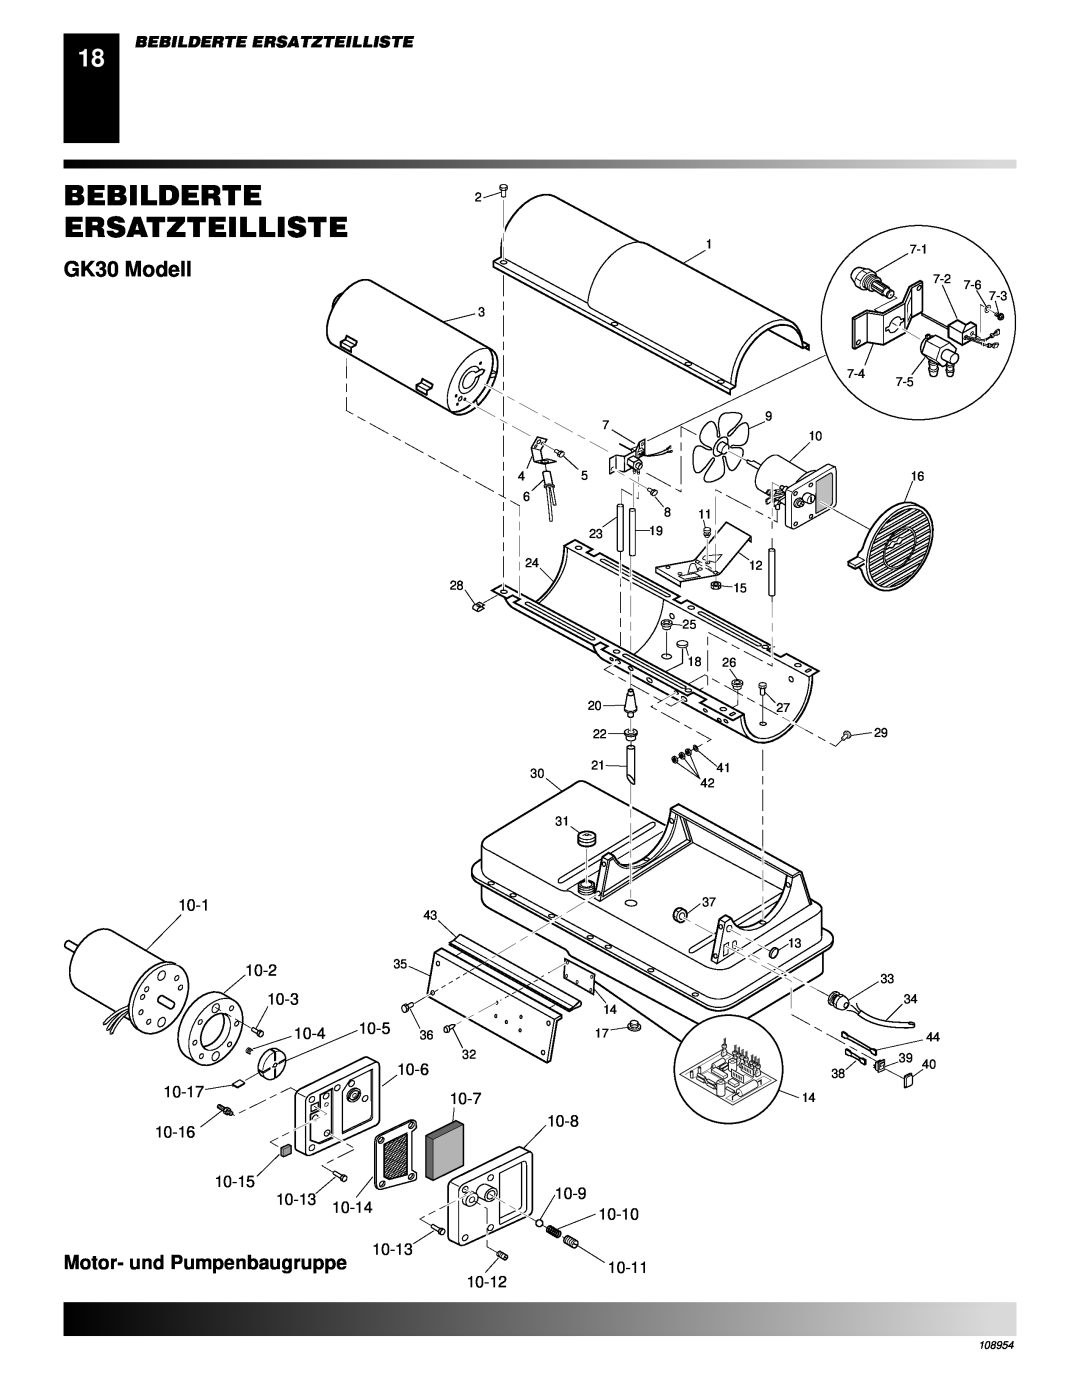 Desa GK20 owner manual GK30 Modell, Bebilderte Ersatzteilliste, Motor- und Pumpenbaugruppe 